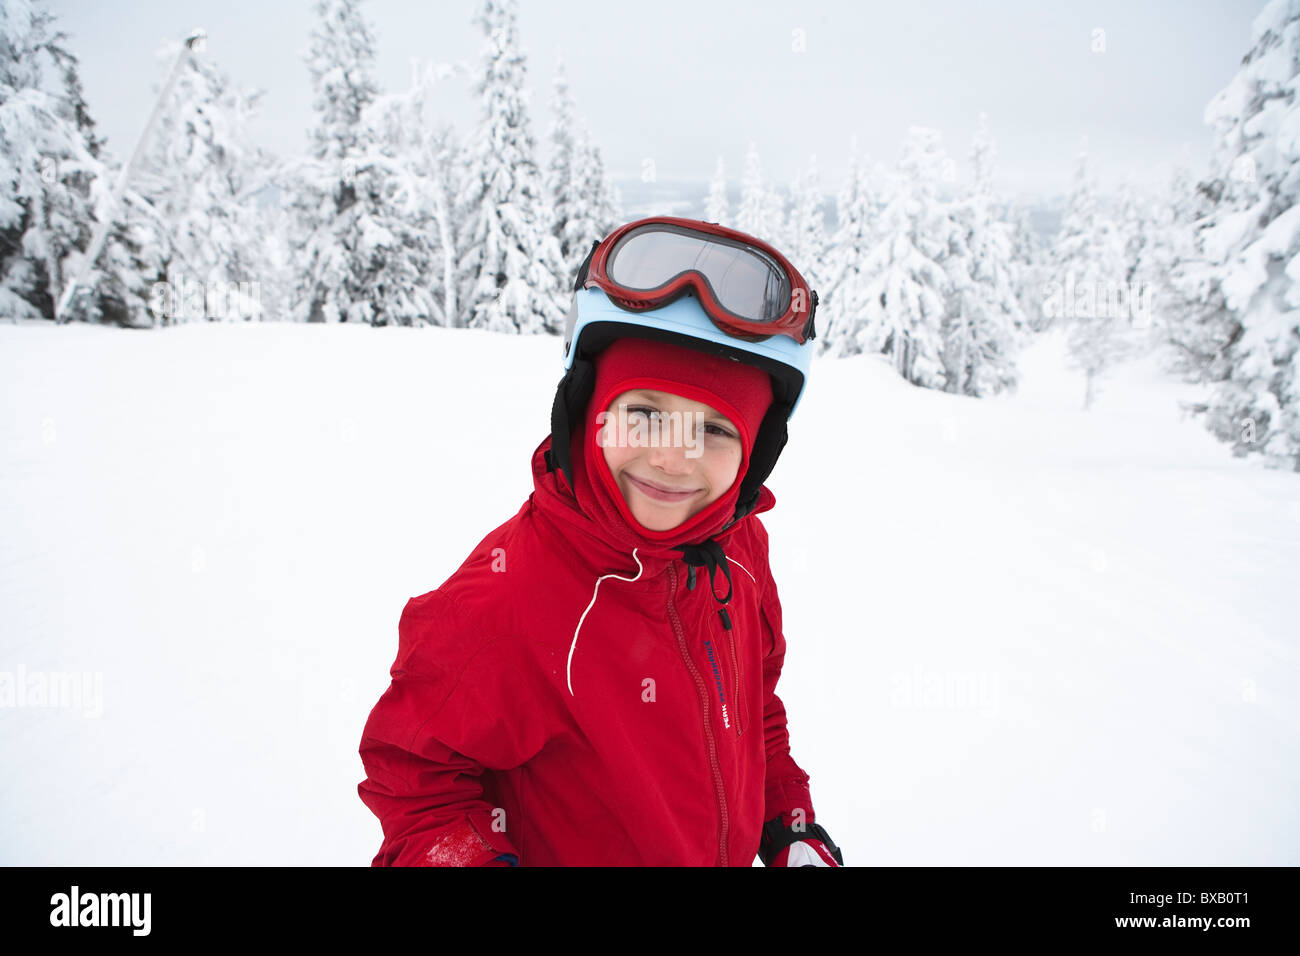 Boy playing on snow Stock Photo